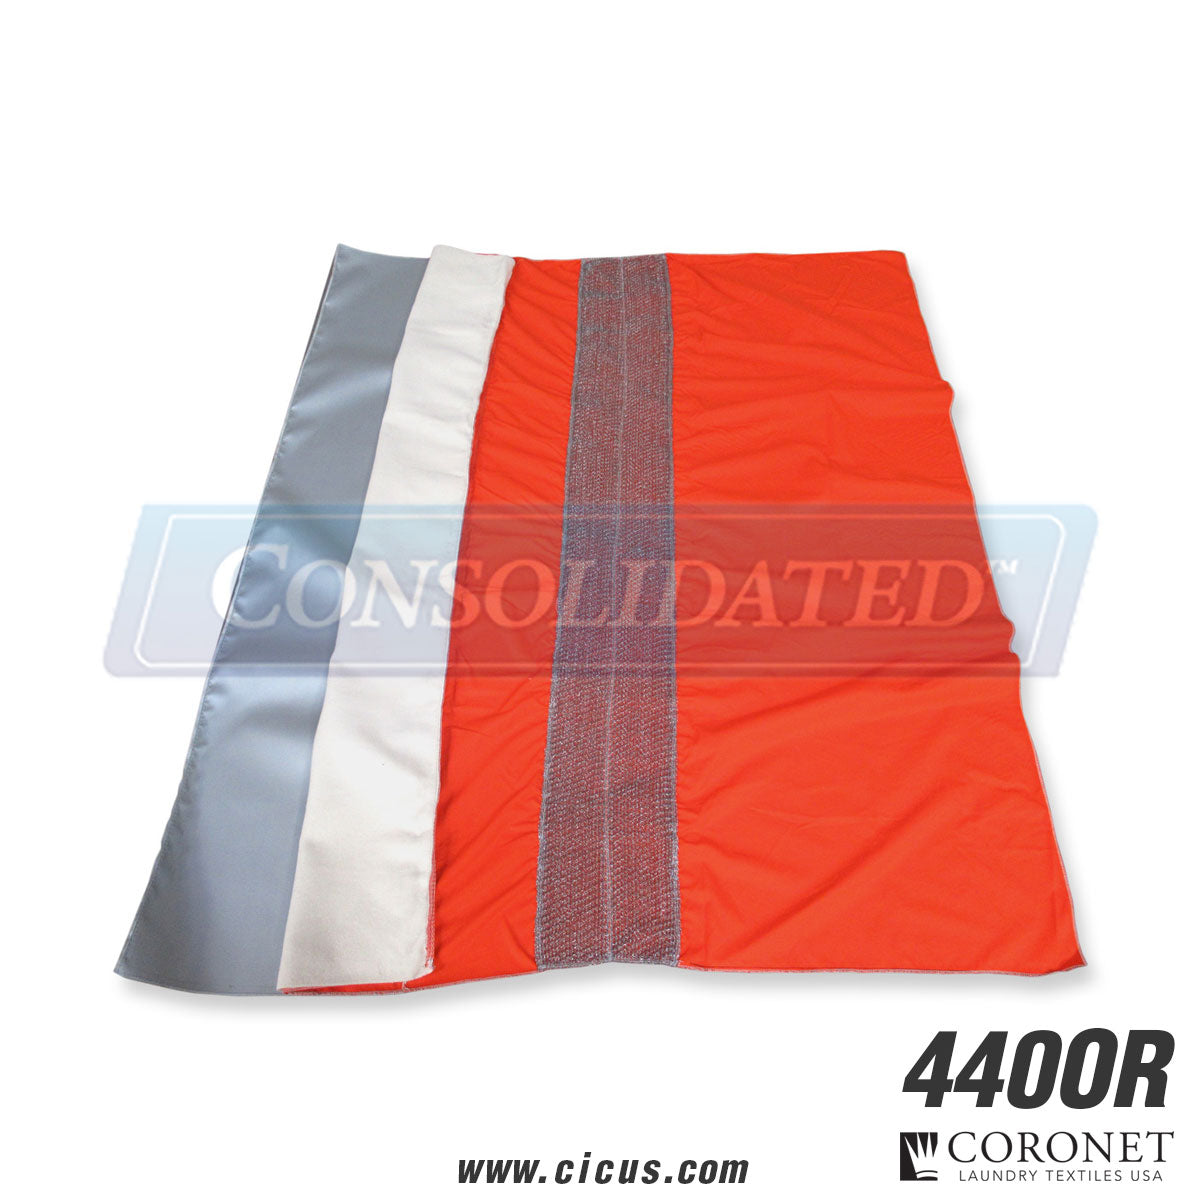 Flatwork Ironer Orange Nomex Wax & Clean Cloth - Mesh & Silicone [440OR]